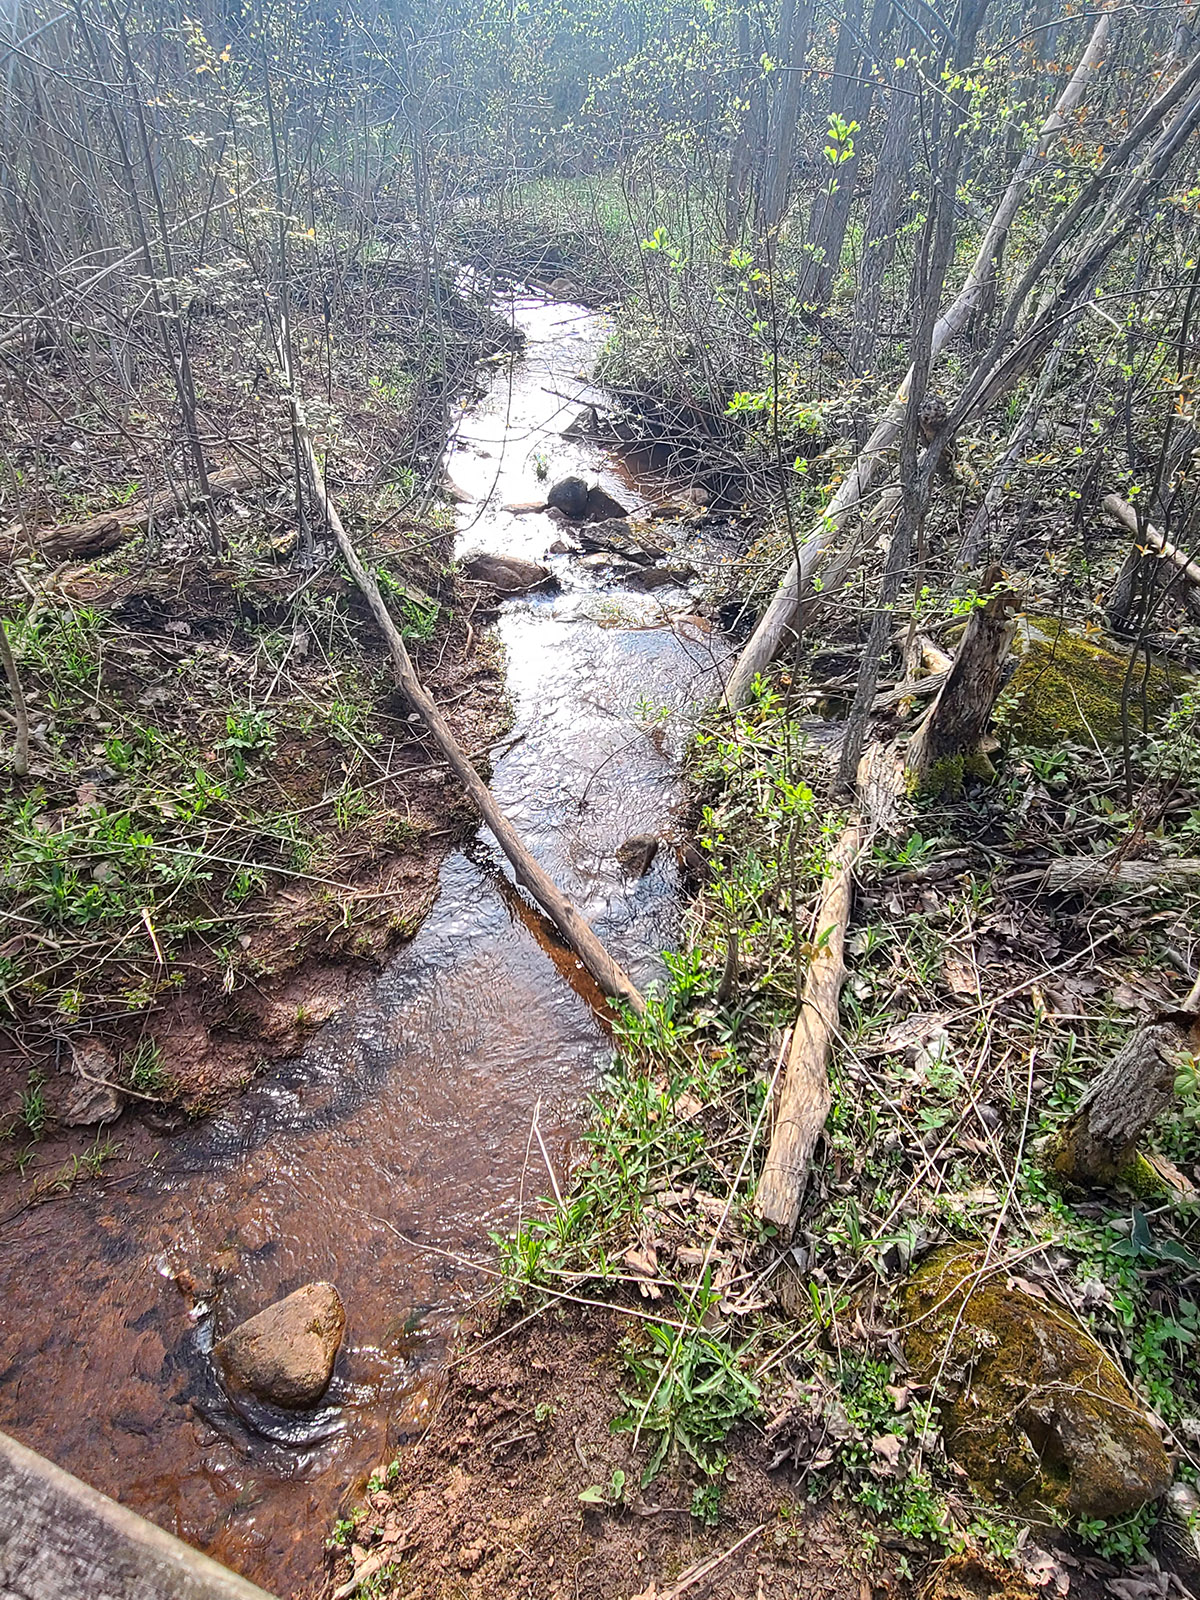 A stream running through the woods.